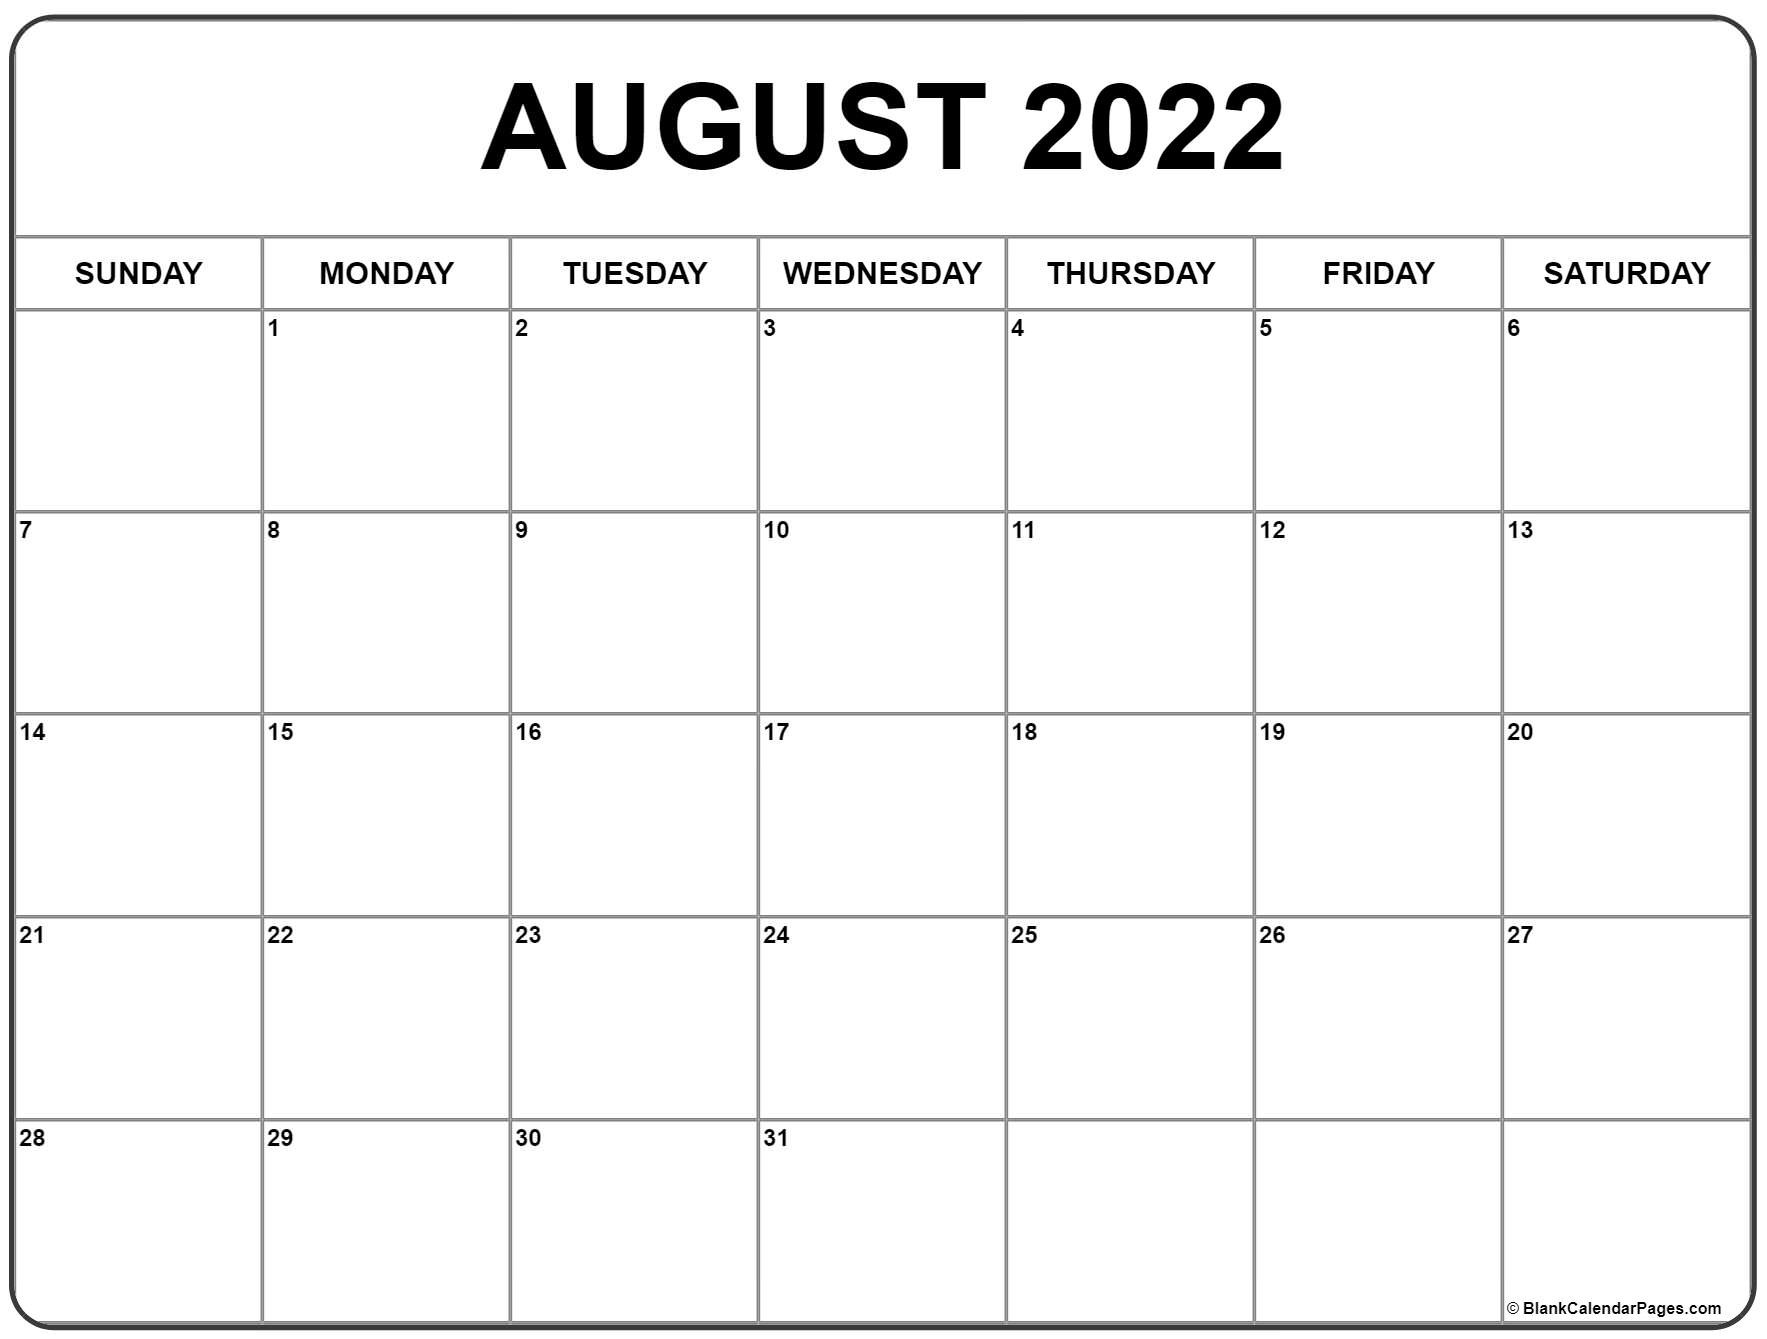 August 2022 Calendar | Free Printable Calendar Templates  August 2022 To August 2022 Calendar Printable